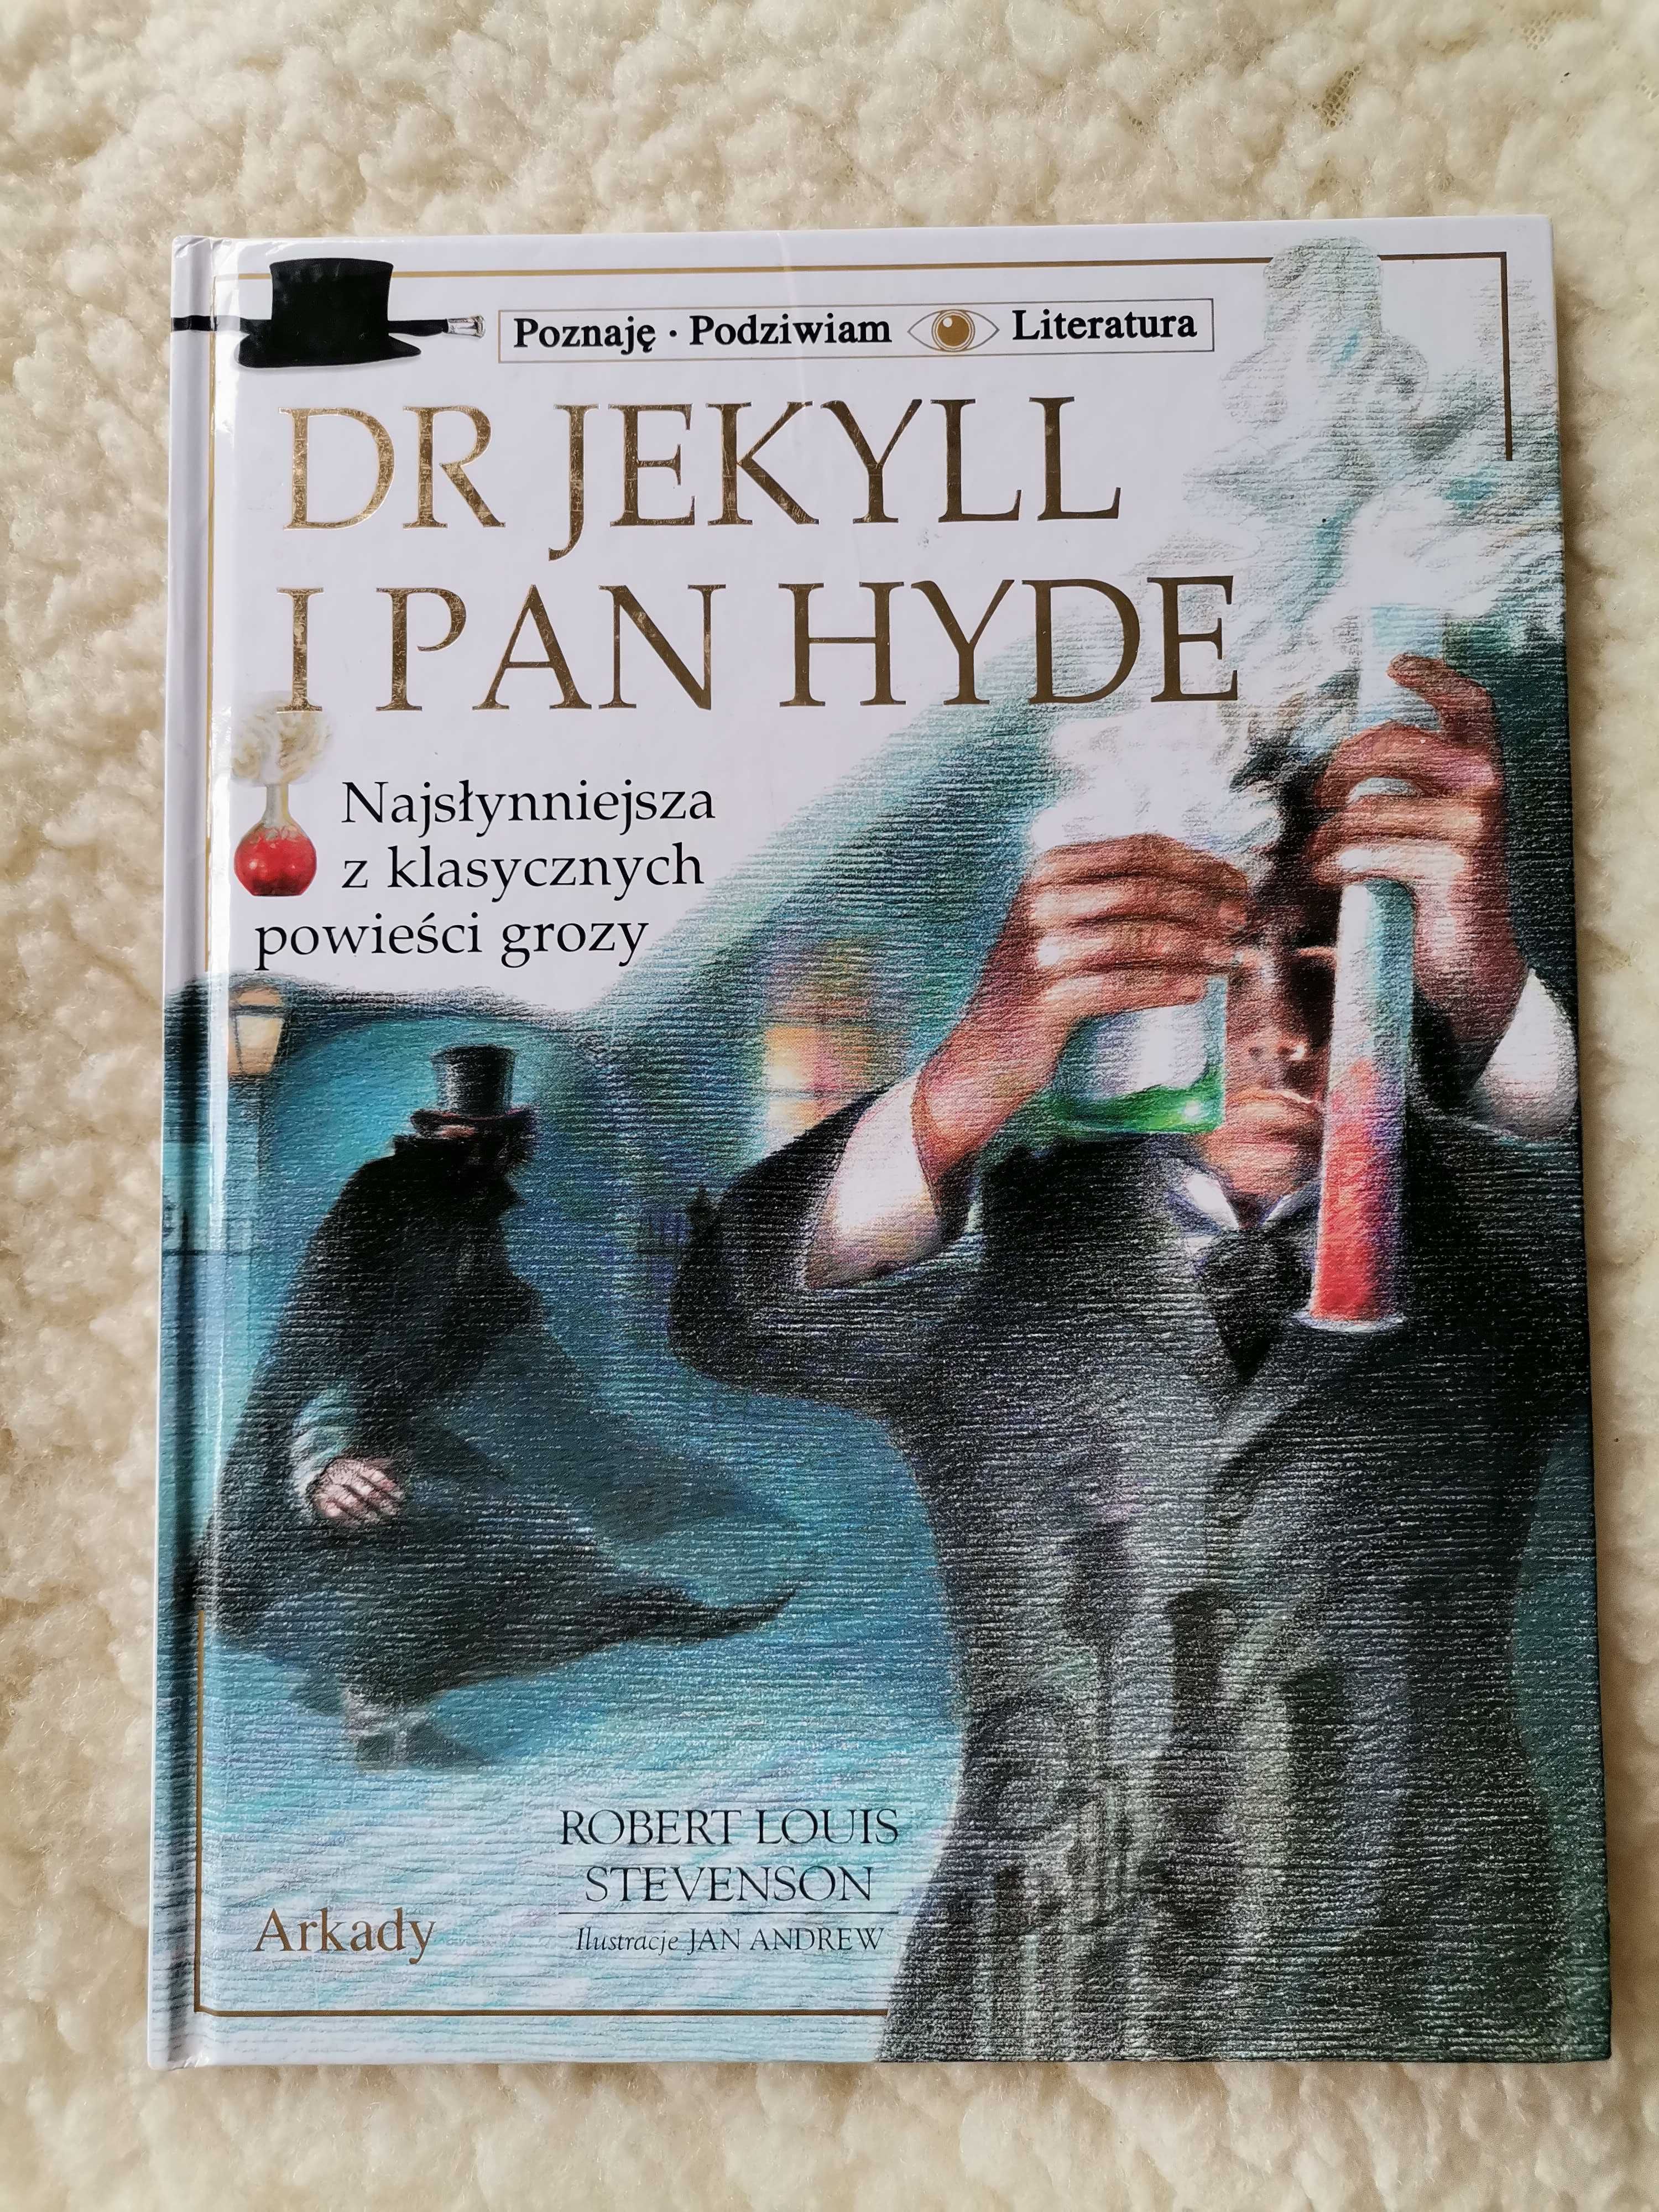 Doktor Jekyll i pan Hyde Robert Stevenson powieść grozy szkocka